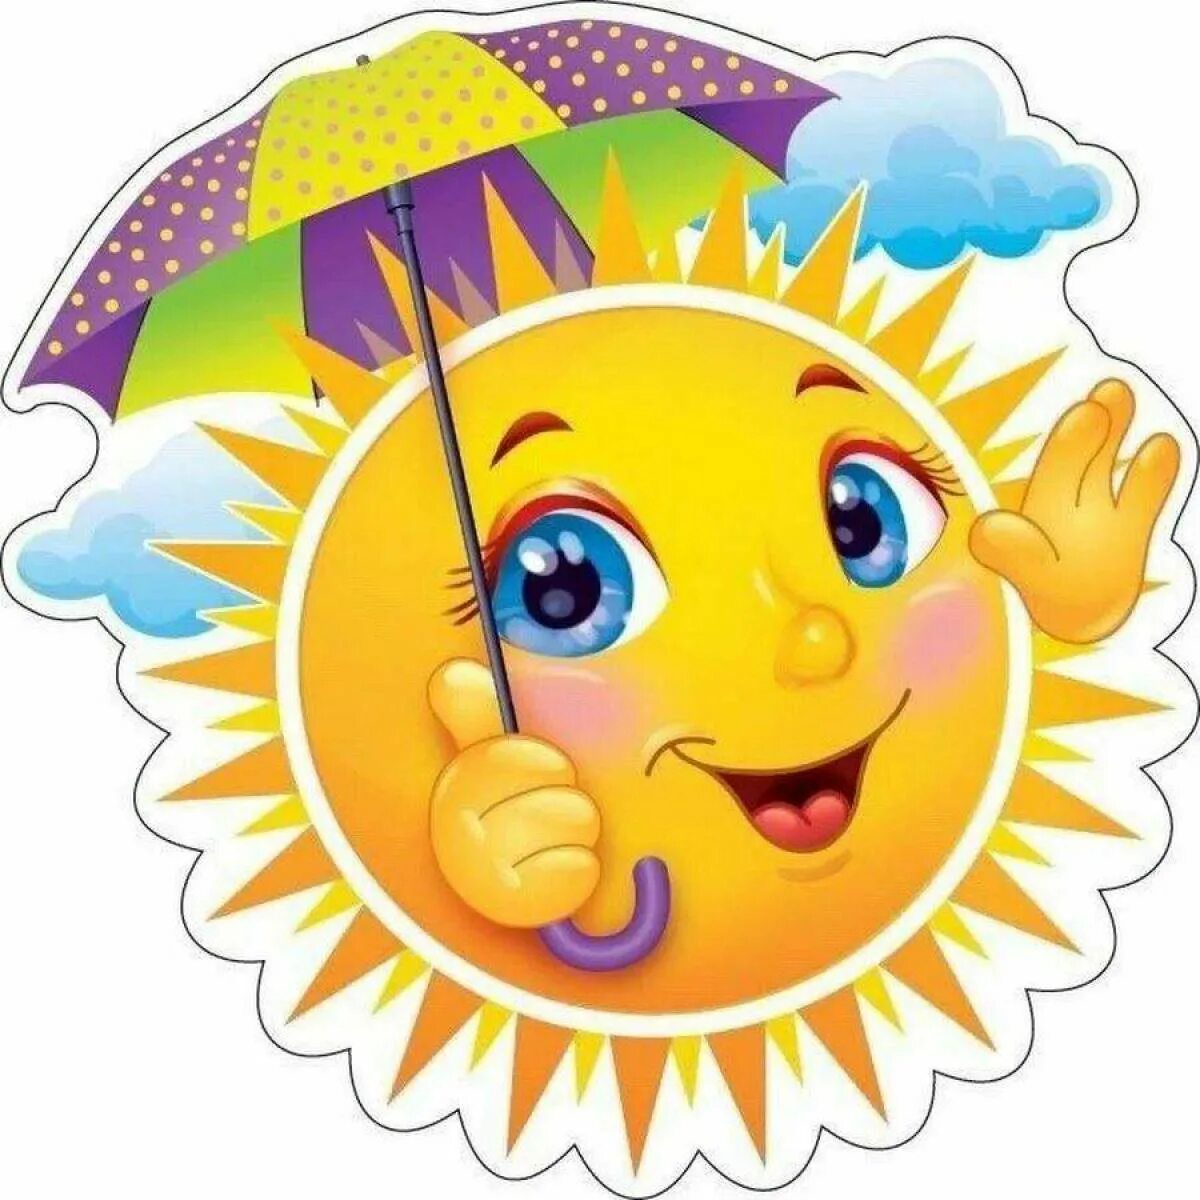 Весеннее солнышко картинки для детей. Солнышко картинка для детей. Солнышко рисунок. Детский сад солнышко. Солнце для детского сада.